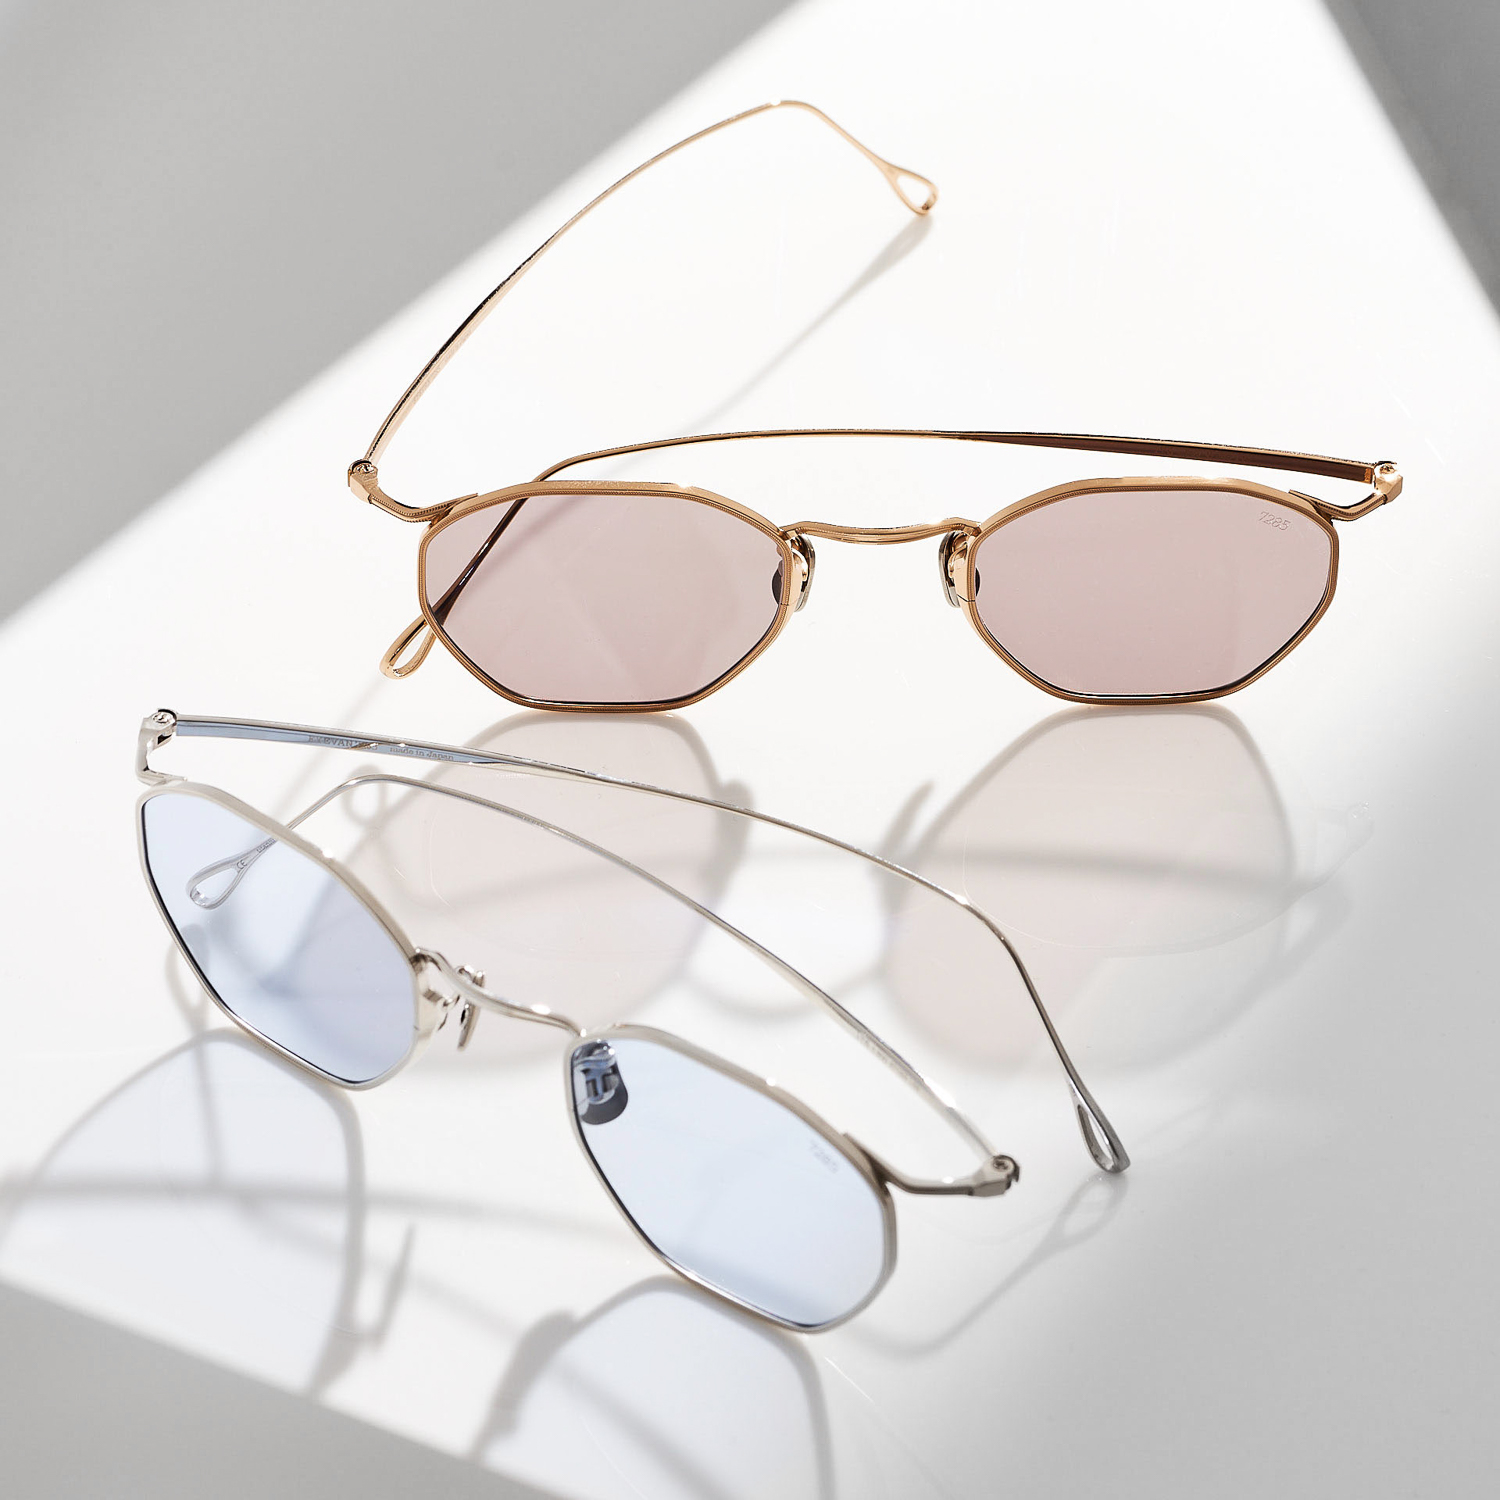 Apple Glasses创意AR眼镜设计_数码|曾经-优秀工业设计作品-优概念